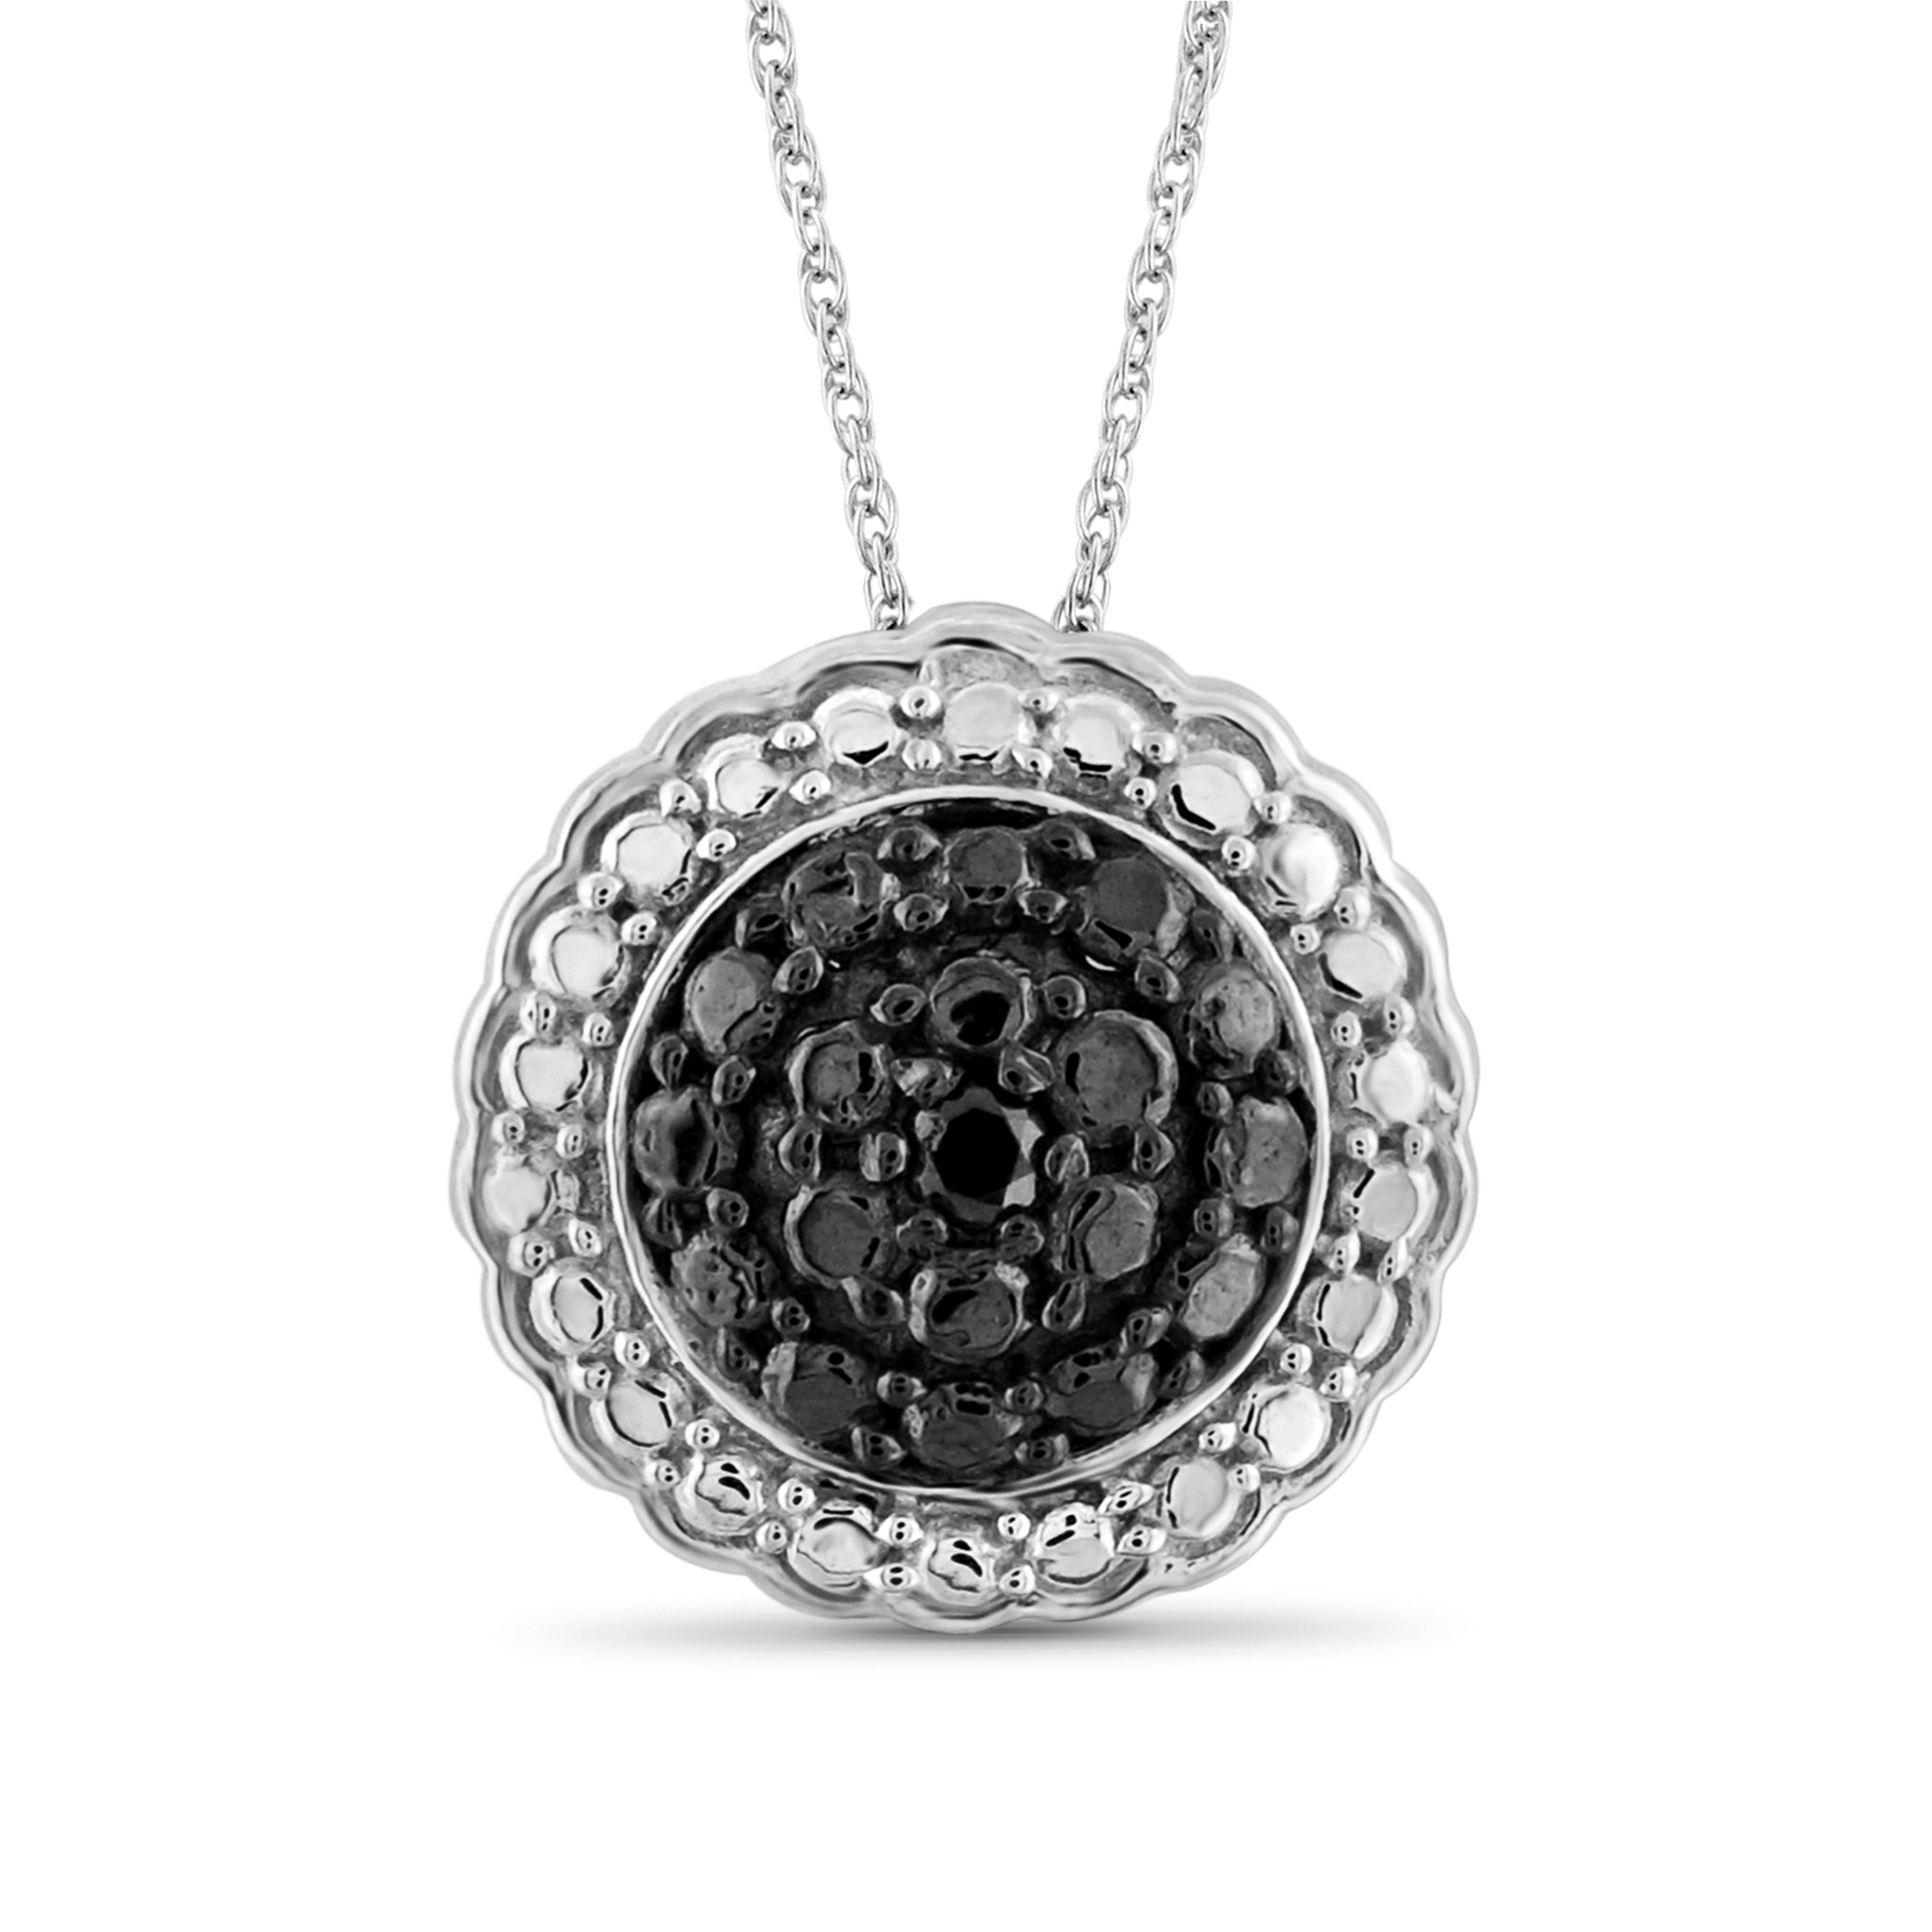 JewelonFire Accent Black Diamond Flower Pendant in Sterling Silver